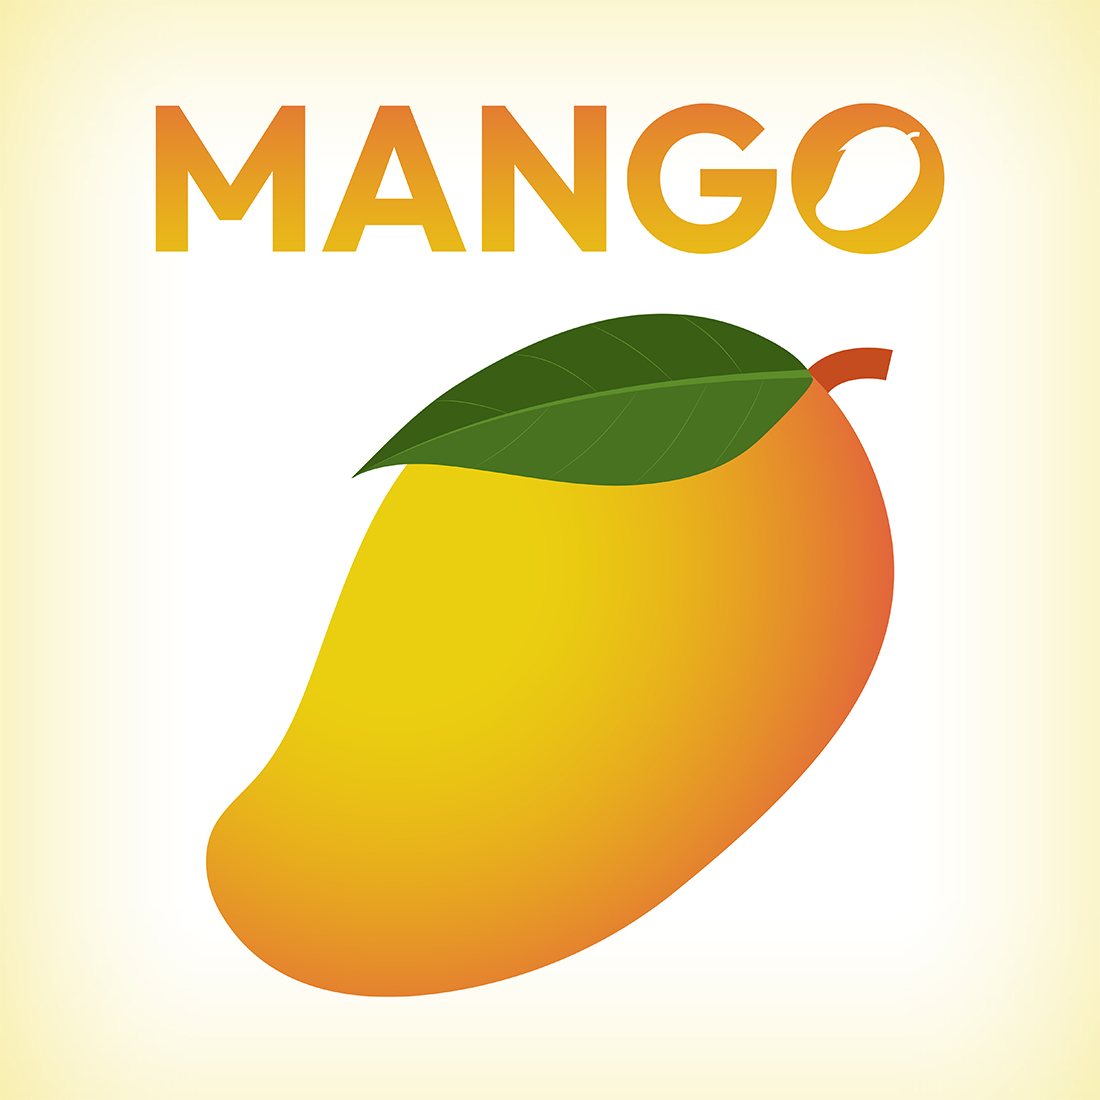 Mango design 3 templates cover image.